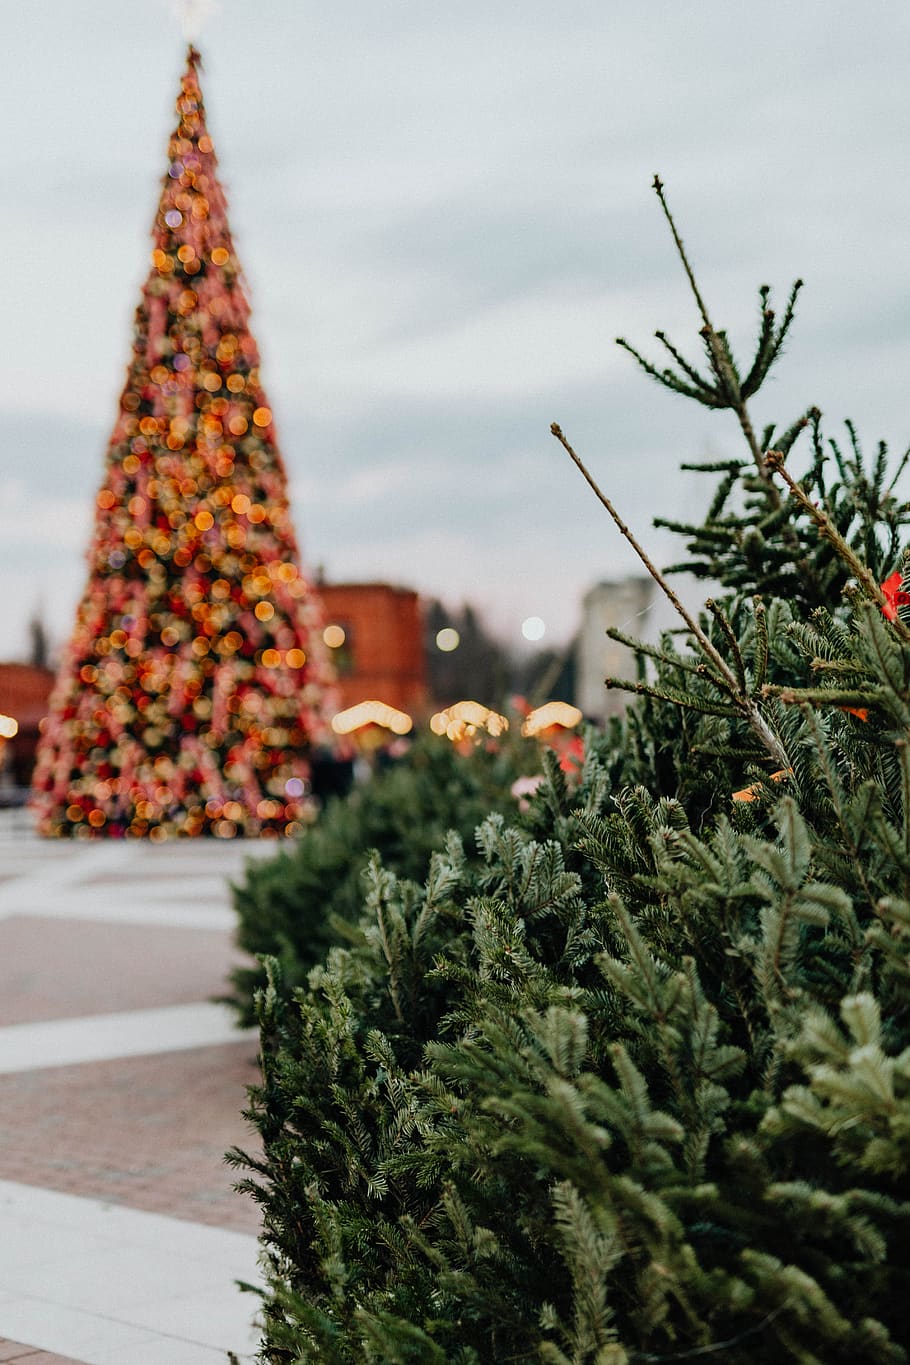 compras, shopping, dezembro, Polônia, lodz, łódź, Europa, Natal, árvore, decorações